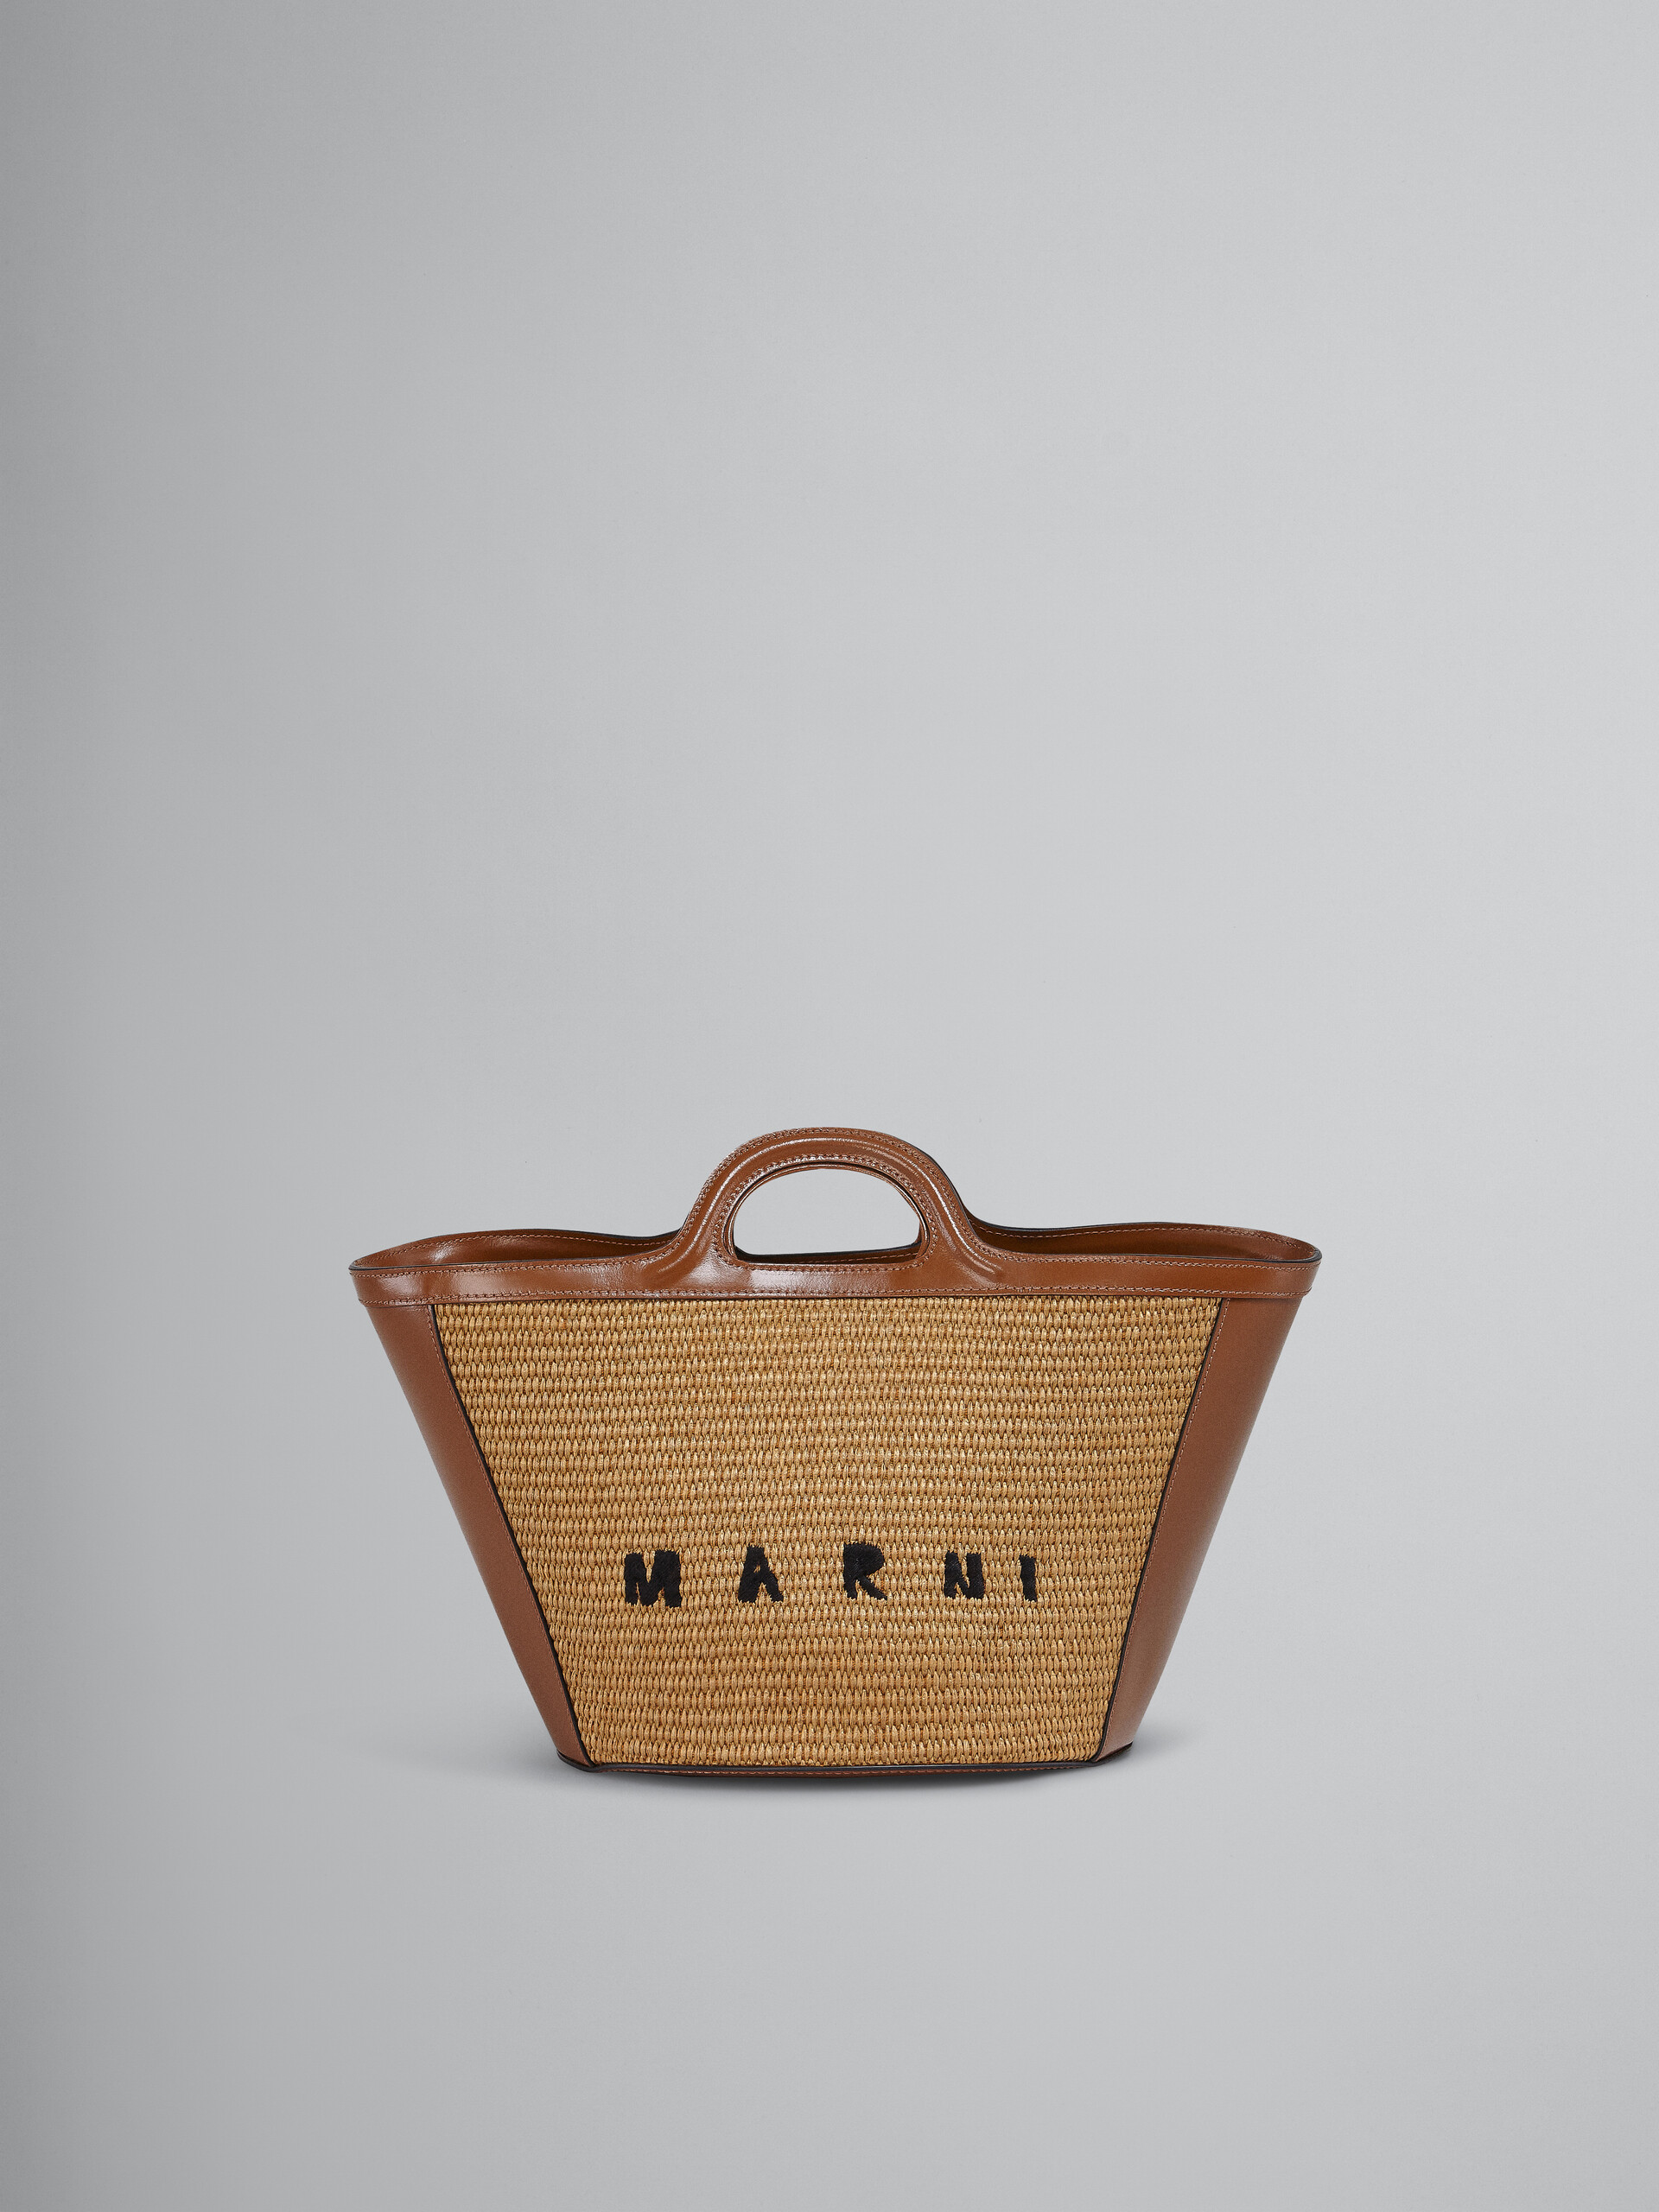 Tropicalia Small Bag in brown leather and raffia - Handbags - Image 1